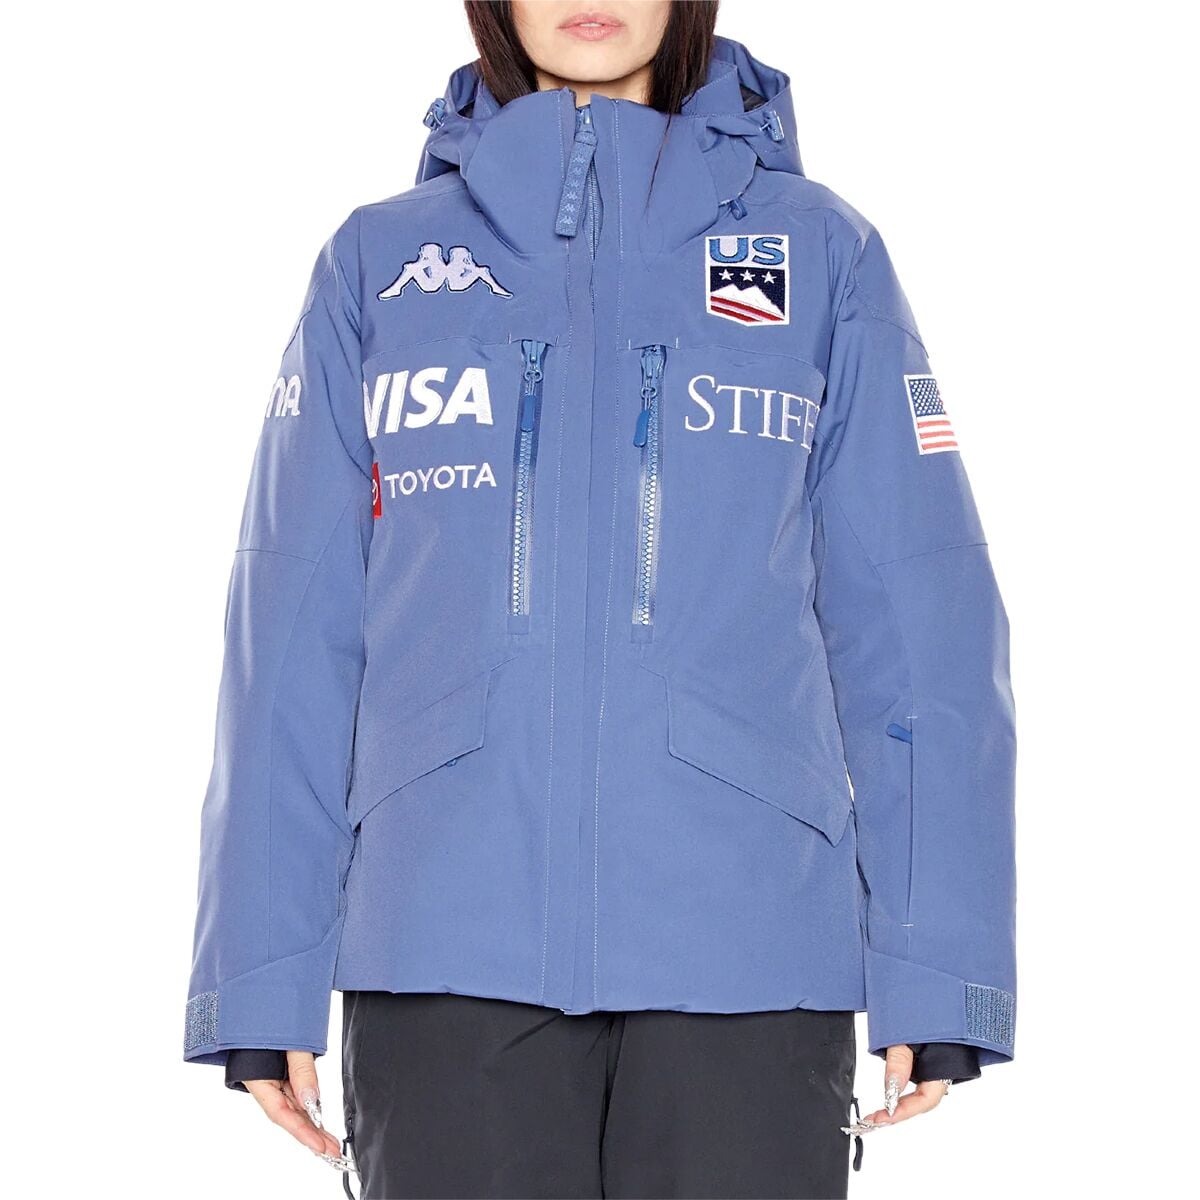 6cento 604t куртка сша Kappa Usa, синий kappa футболка женская kappa размер 50